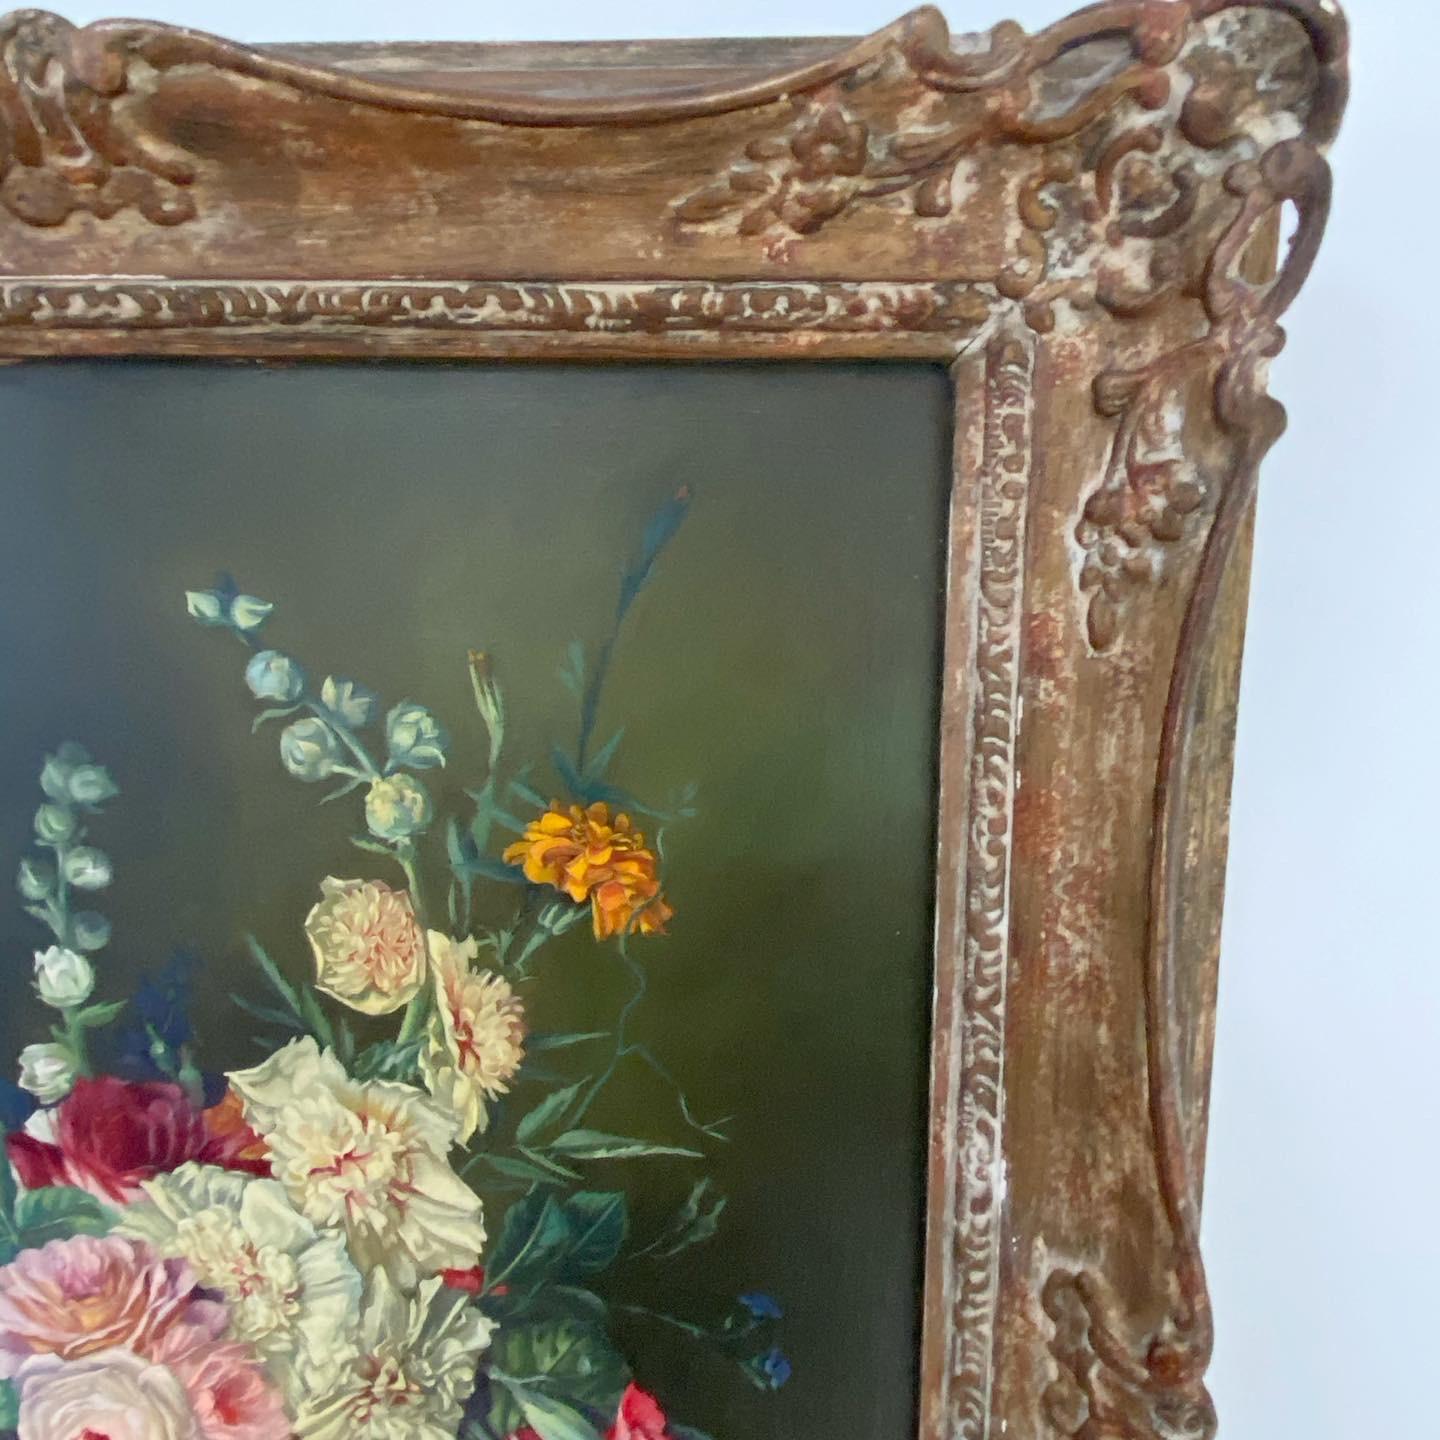 Gesso Flowers in a Vase Still Life Oil on Board